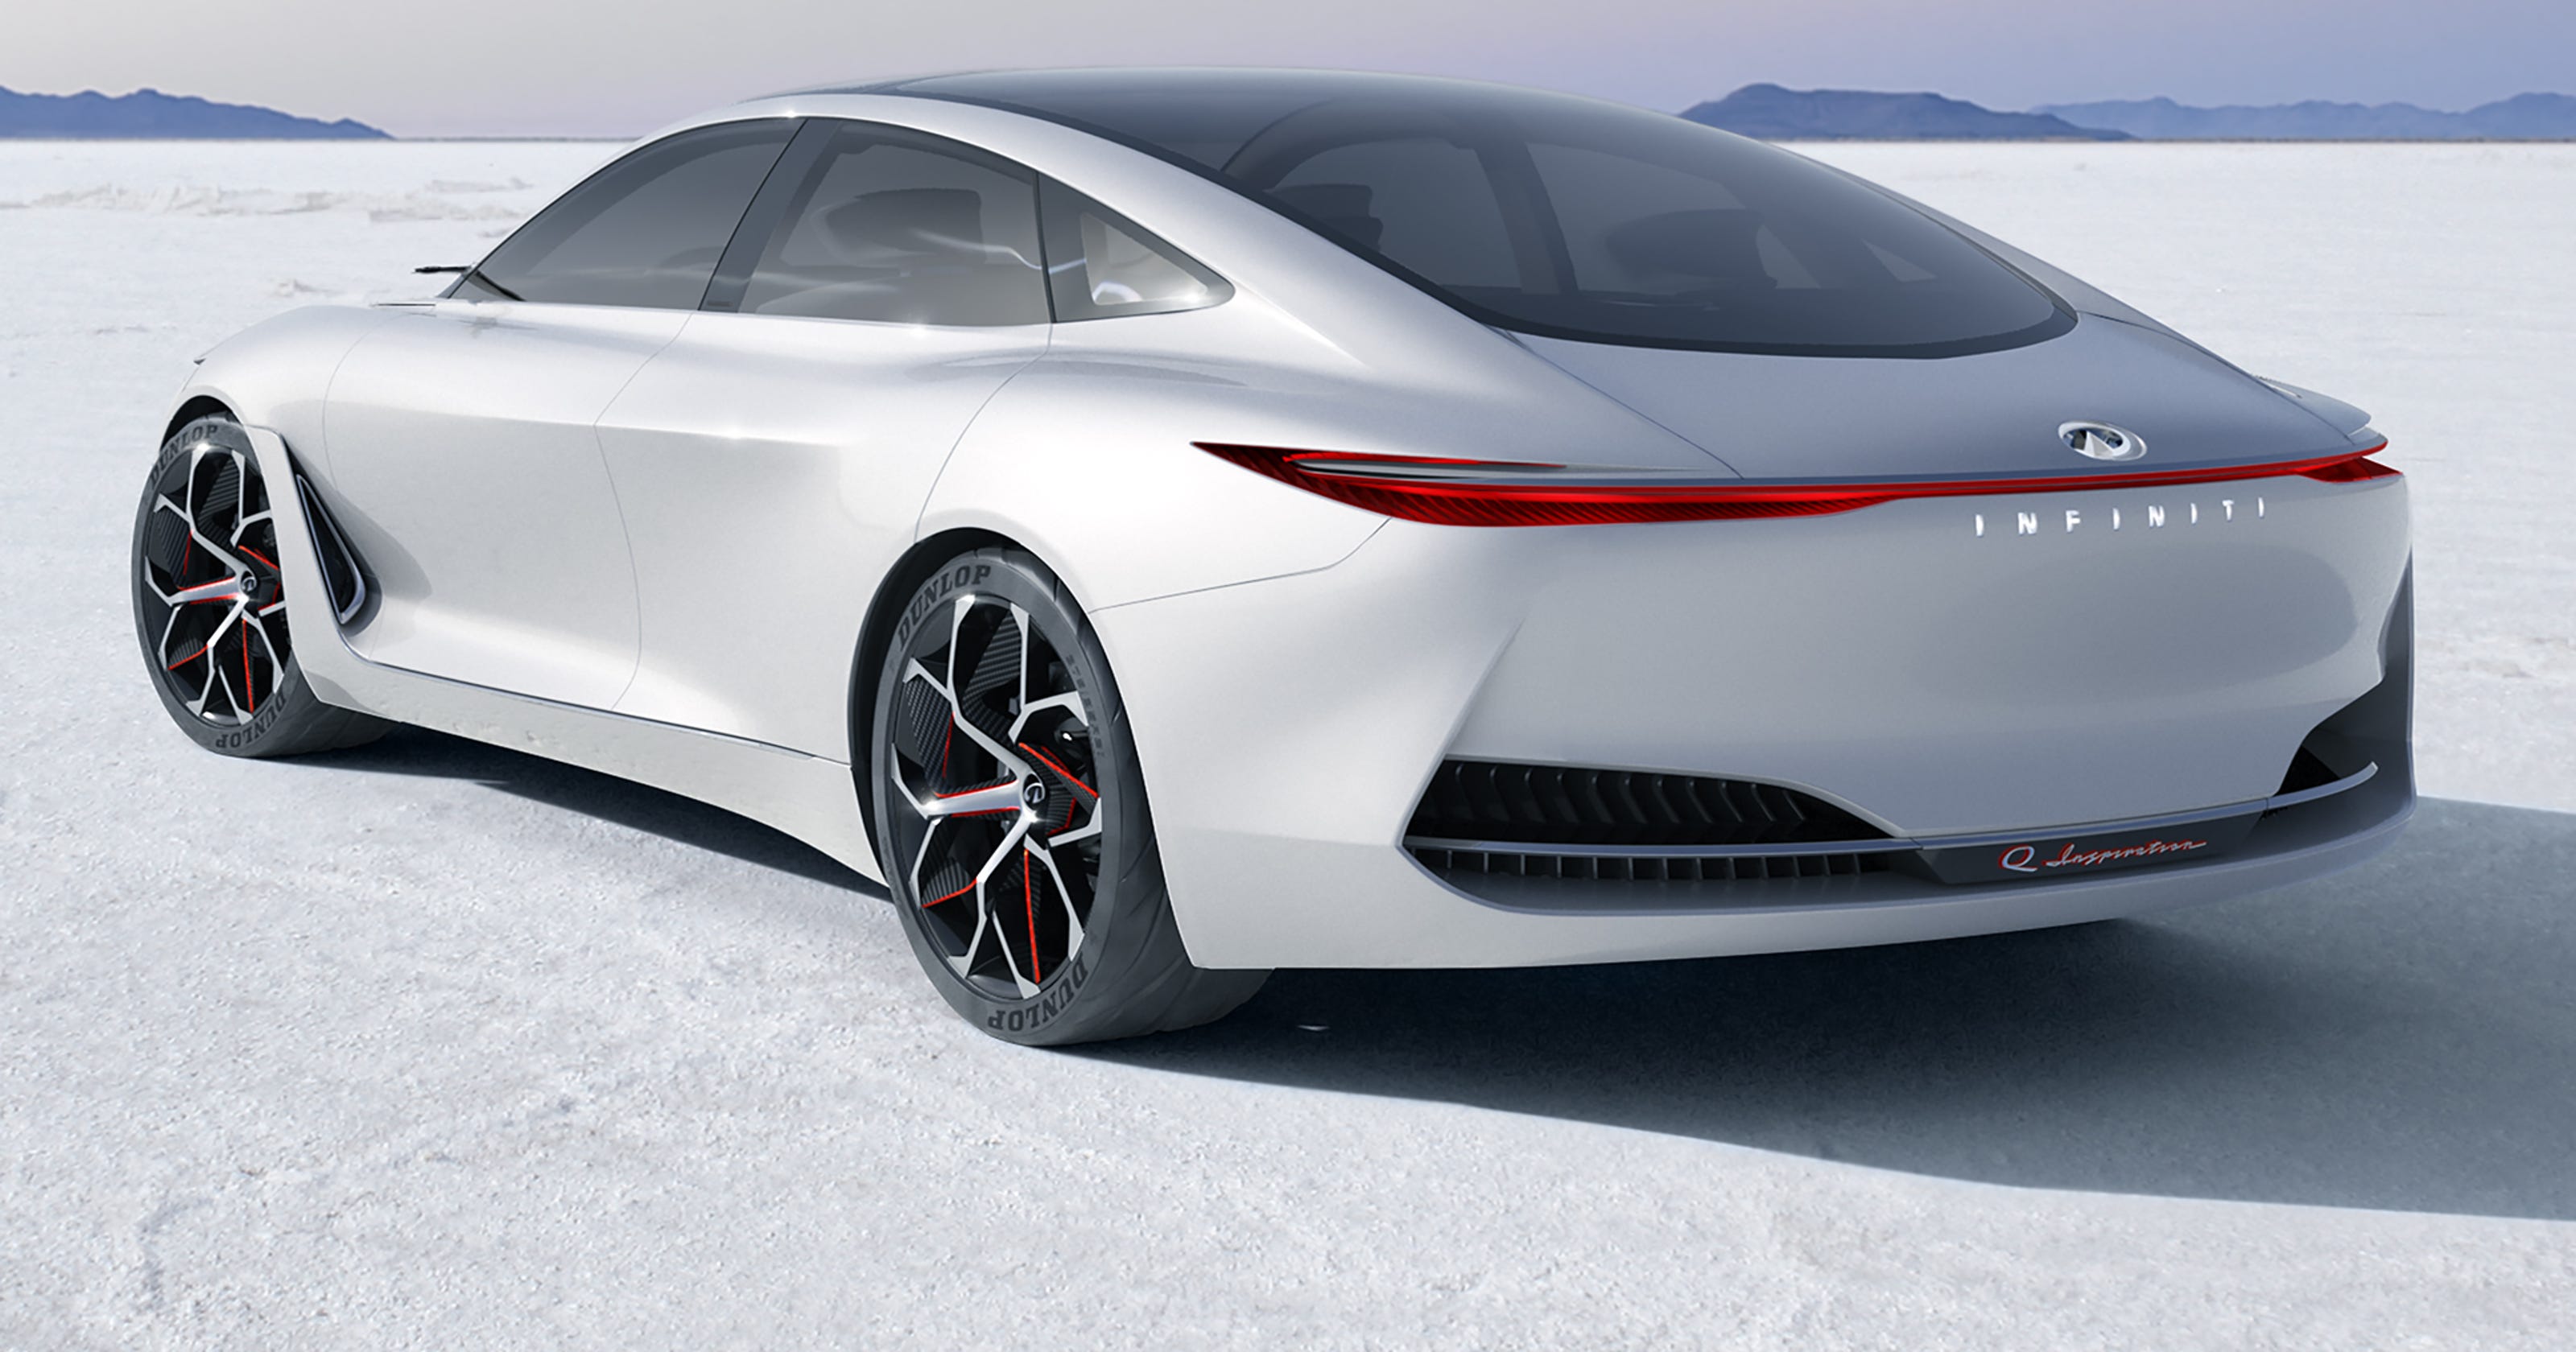 Infiniti gives first look at sleek coupelike sedan concept